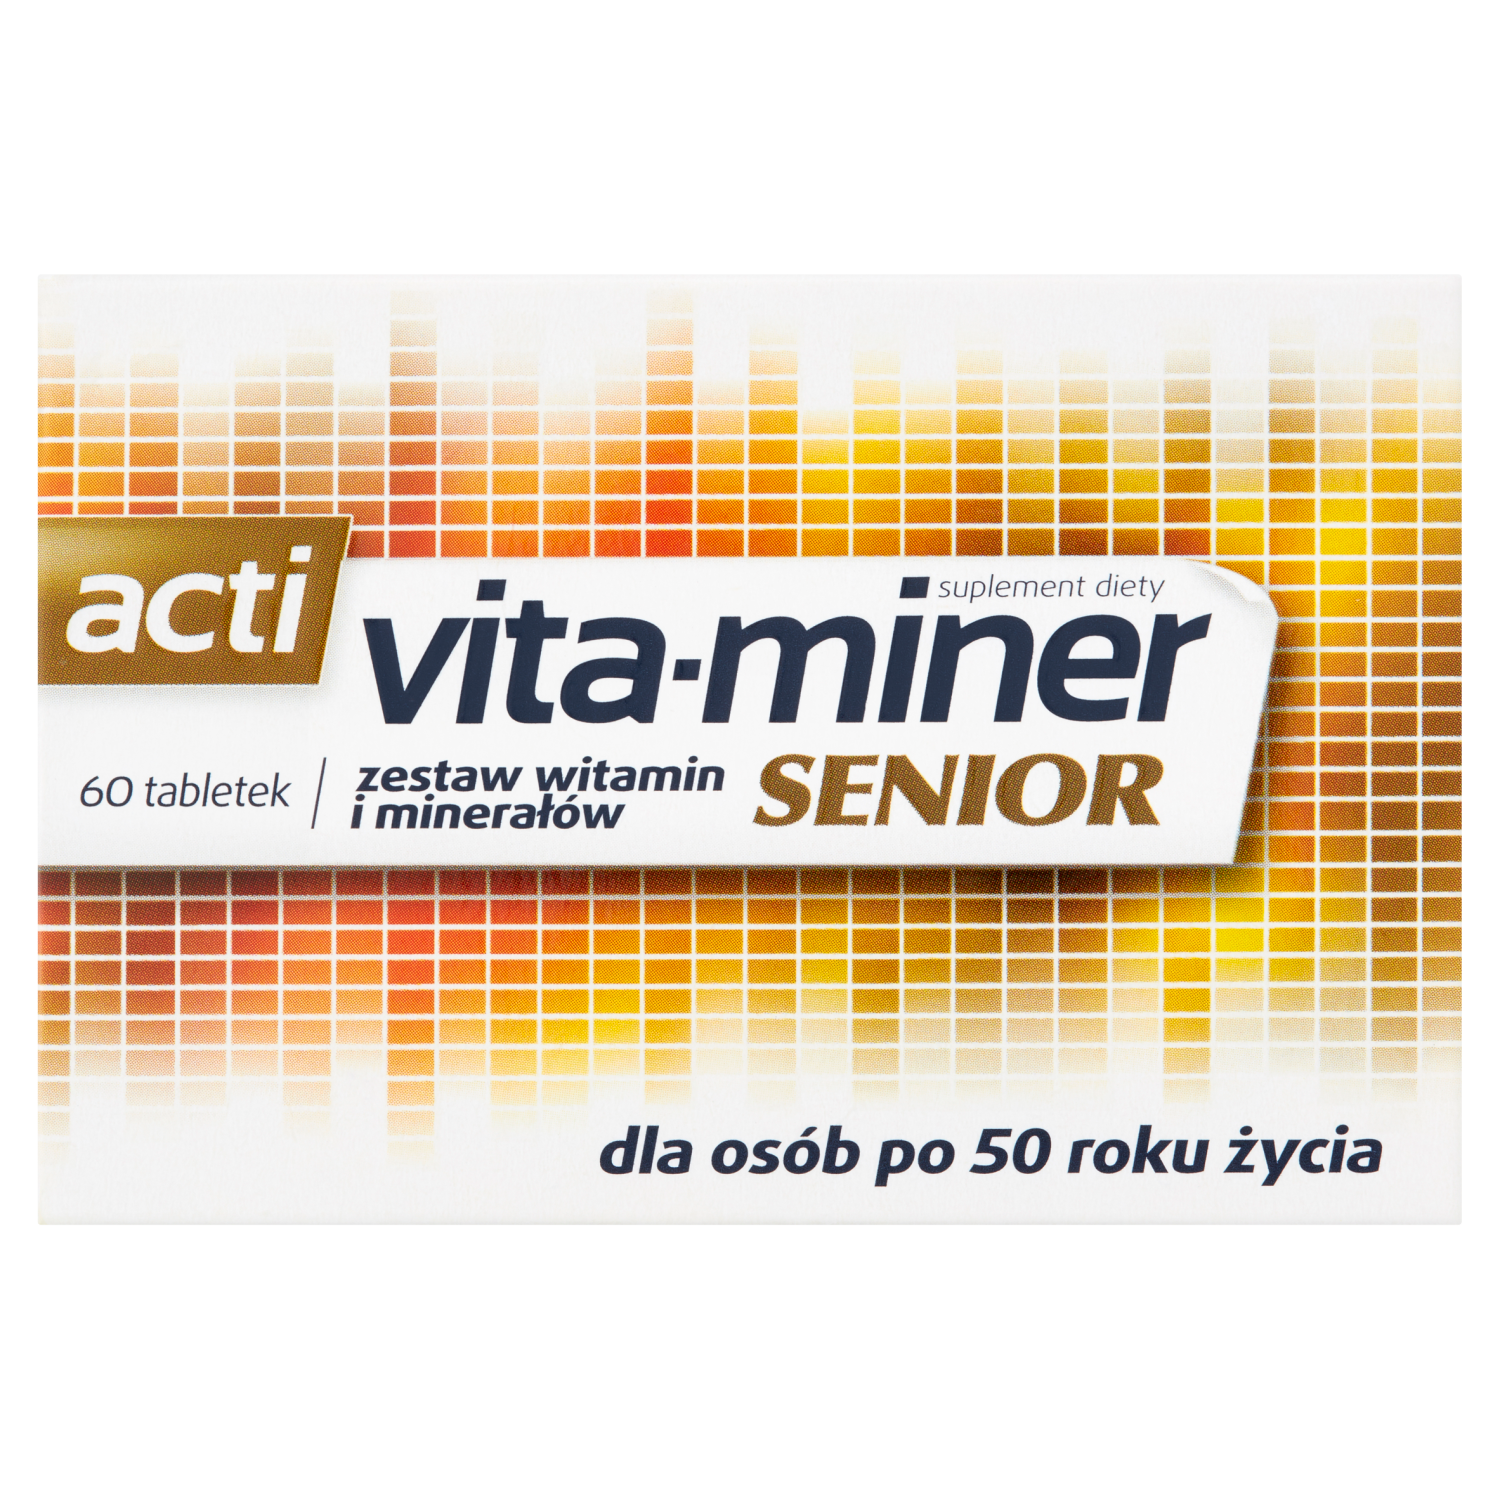 vita miner prenatal биологически активная добавка 60 таблеток 1 упаковка Vita-Miner Senior биологически активная добавка, 60 таблеток/1 упаковка